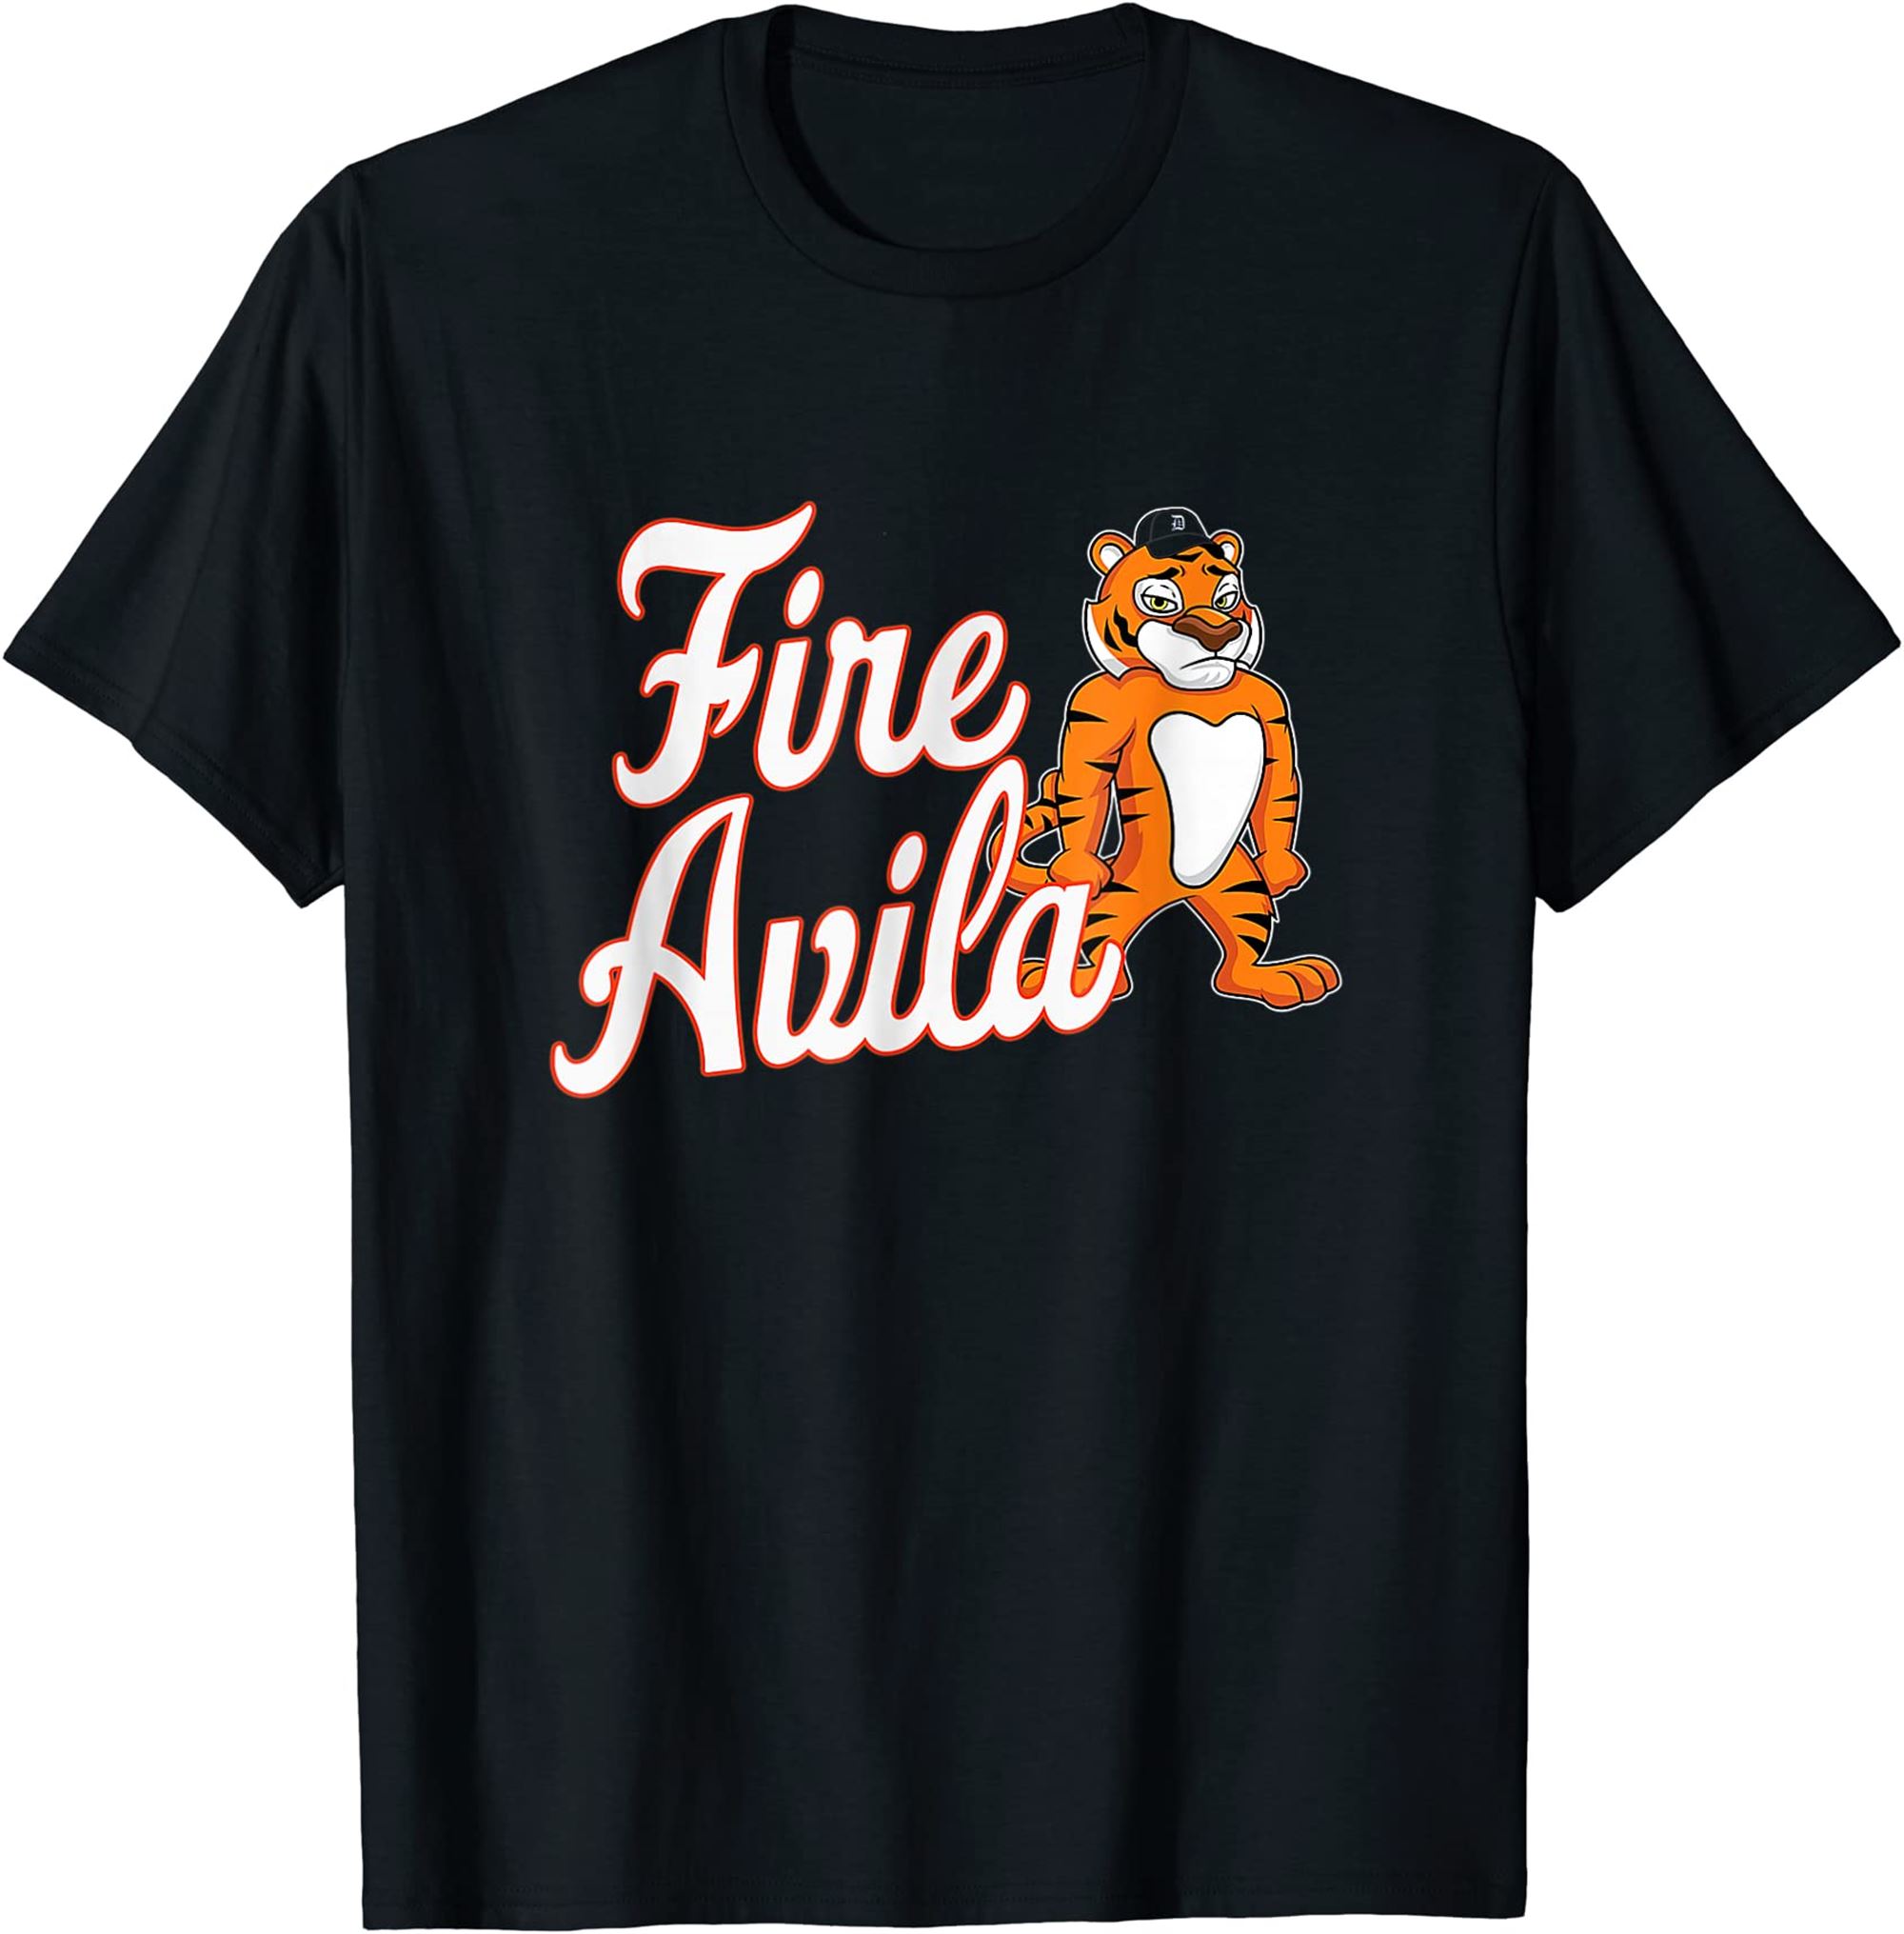 Fire Avila T-shirt Full Size Up To 5xl